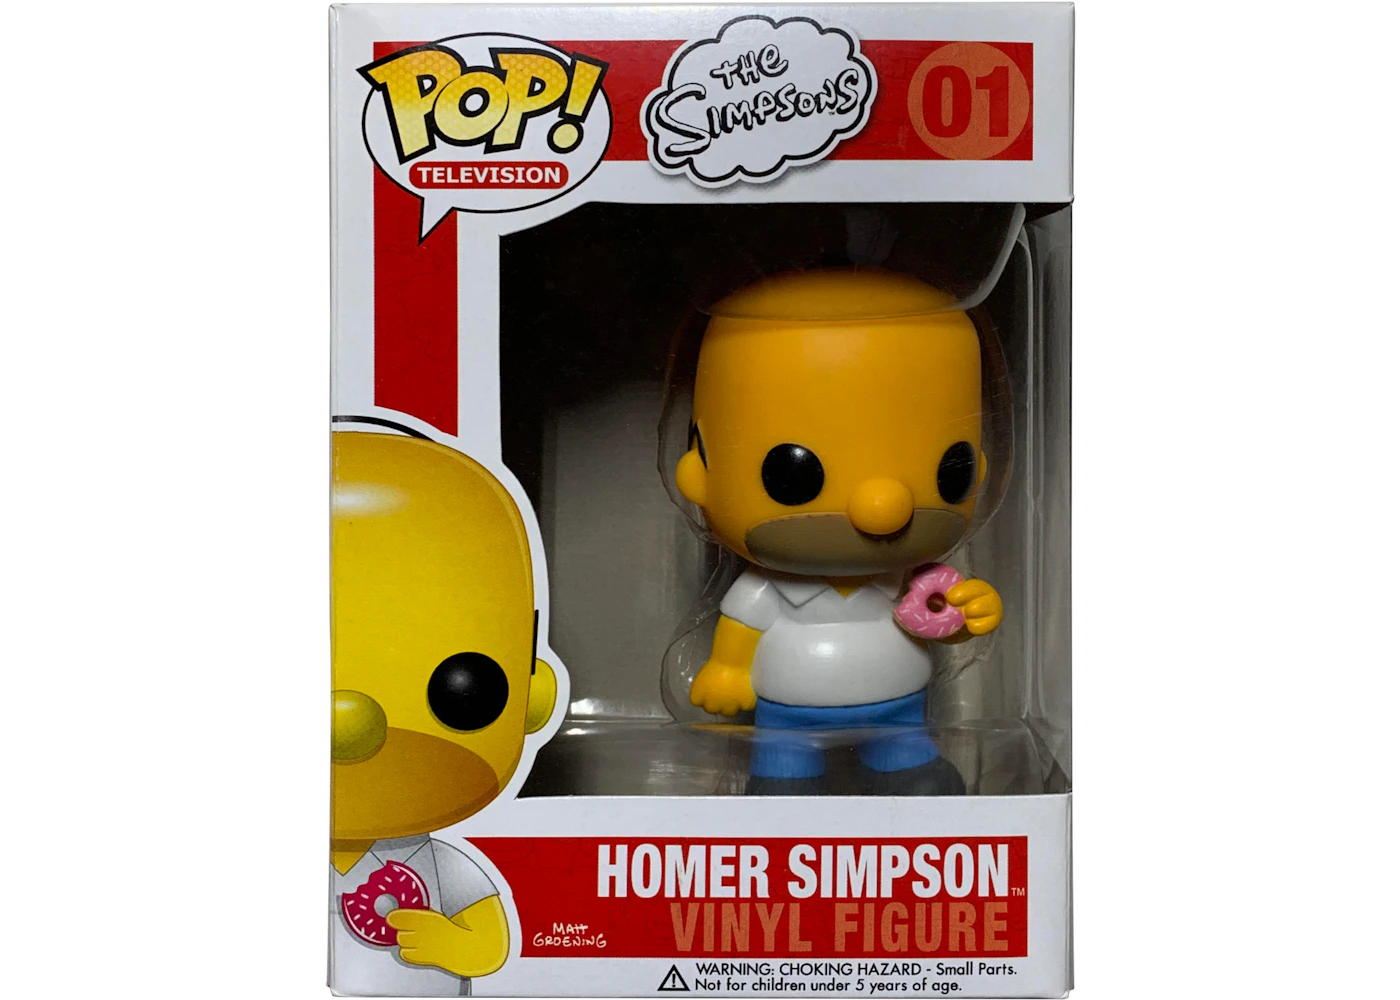 Funko Pop! Television The Simpsons Homer Simpson Figure #01 -